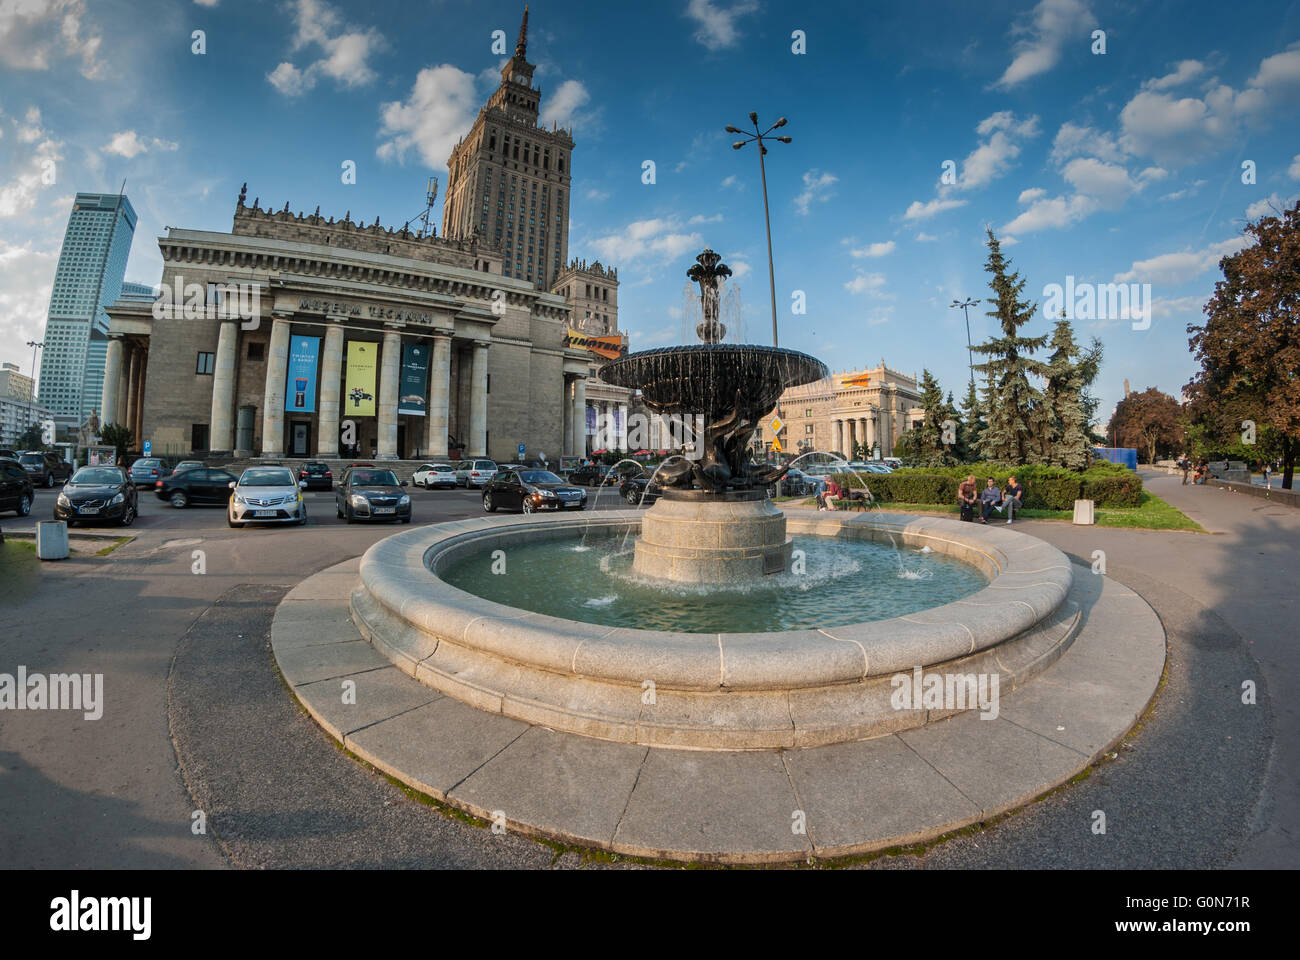 The Fountain and the Palac Kultury (Palace of Culture), Warszawa Stock Photo